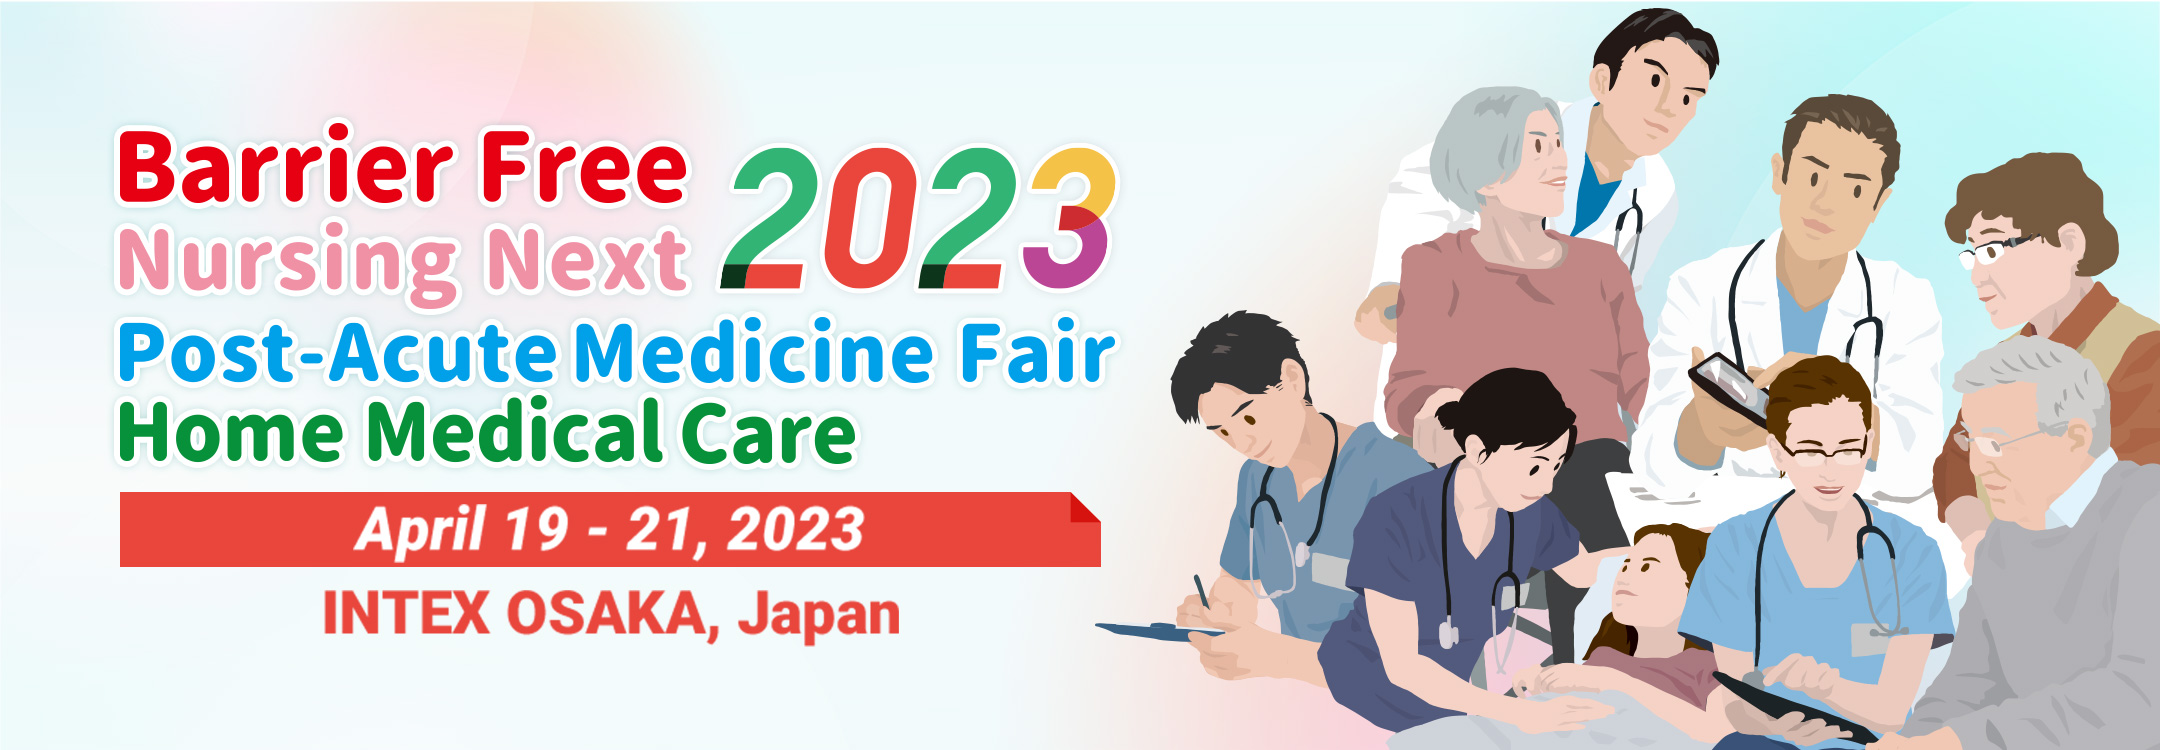 Barrier Free 2023/Post-Acute Medicine Fair 2023/Nursing Next 2023/Home Medical Care 2023 April 19 - 21 2023 INTEX OSAKA, JAPAN